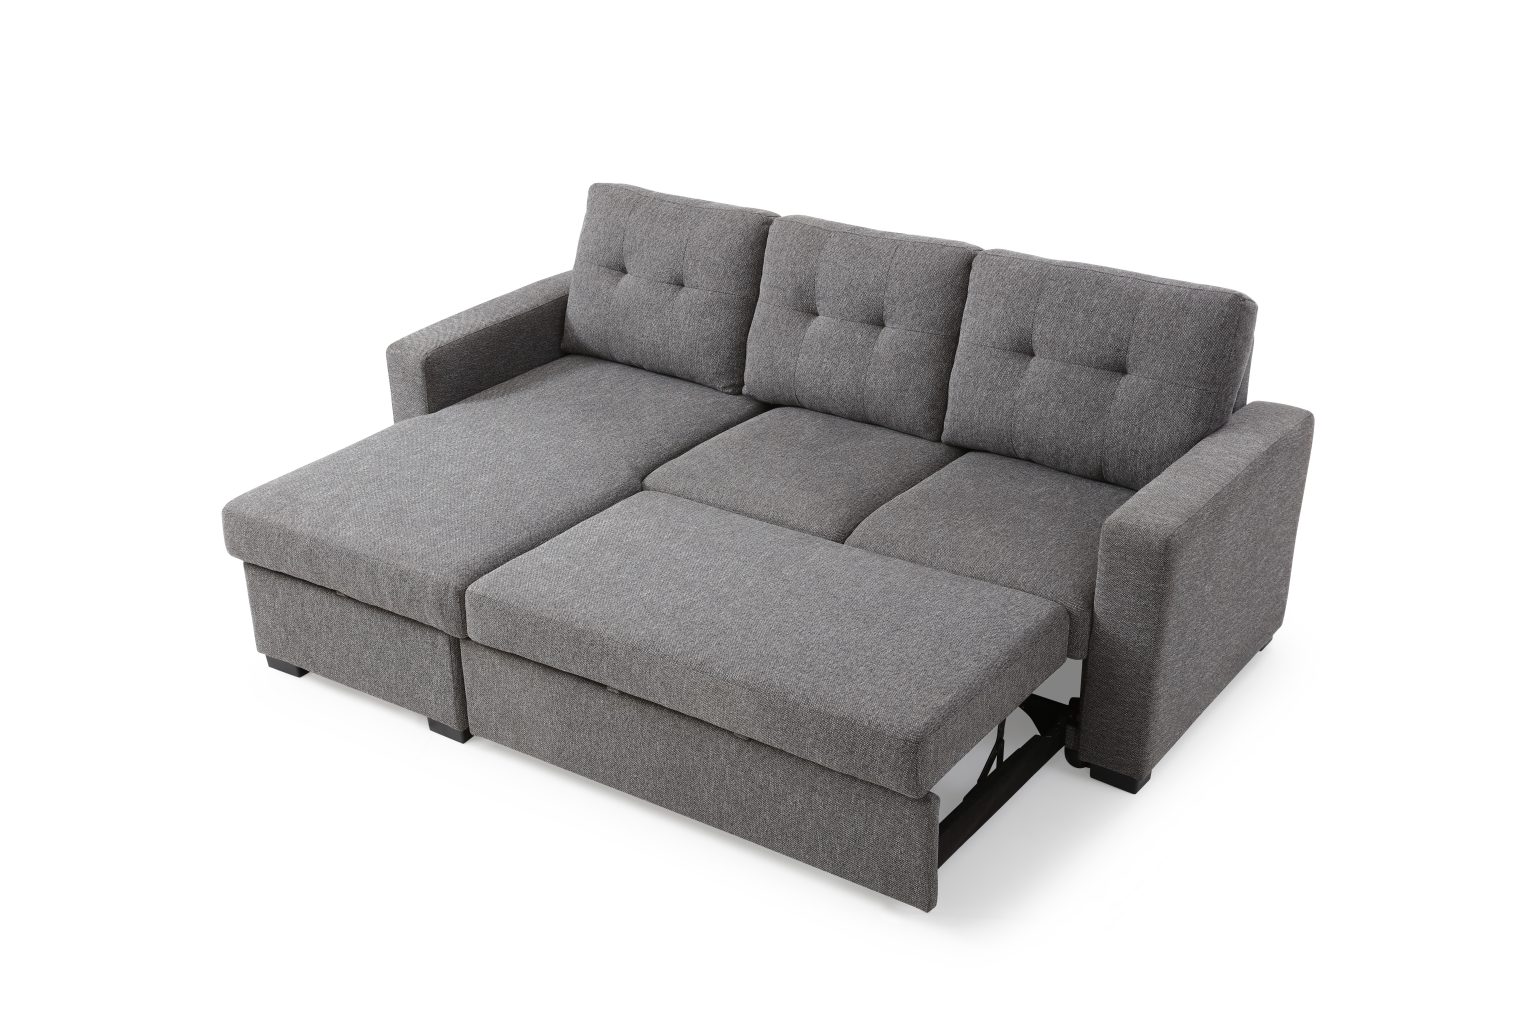 corner sofa bed for sale birmingham